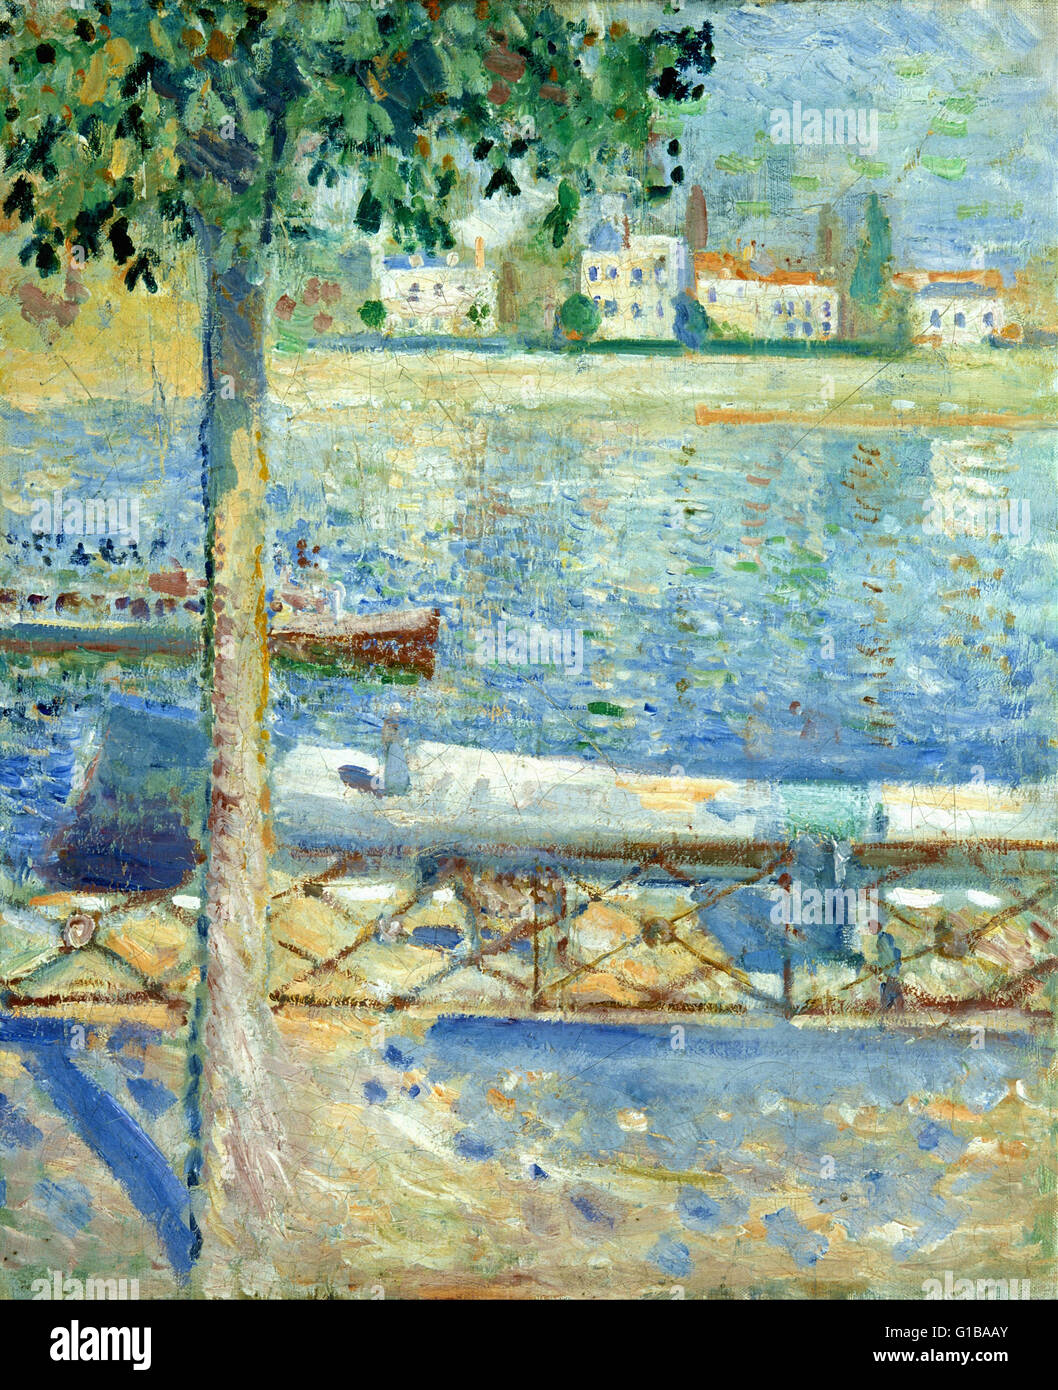 Edvard Munch - The Seine at Saint-Cloud - The Munch Museum, Oslo Stock Photo